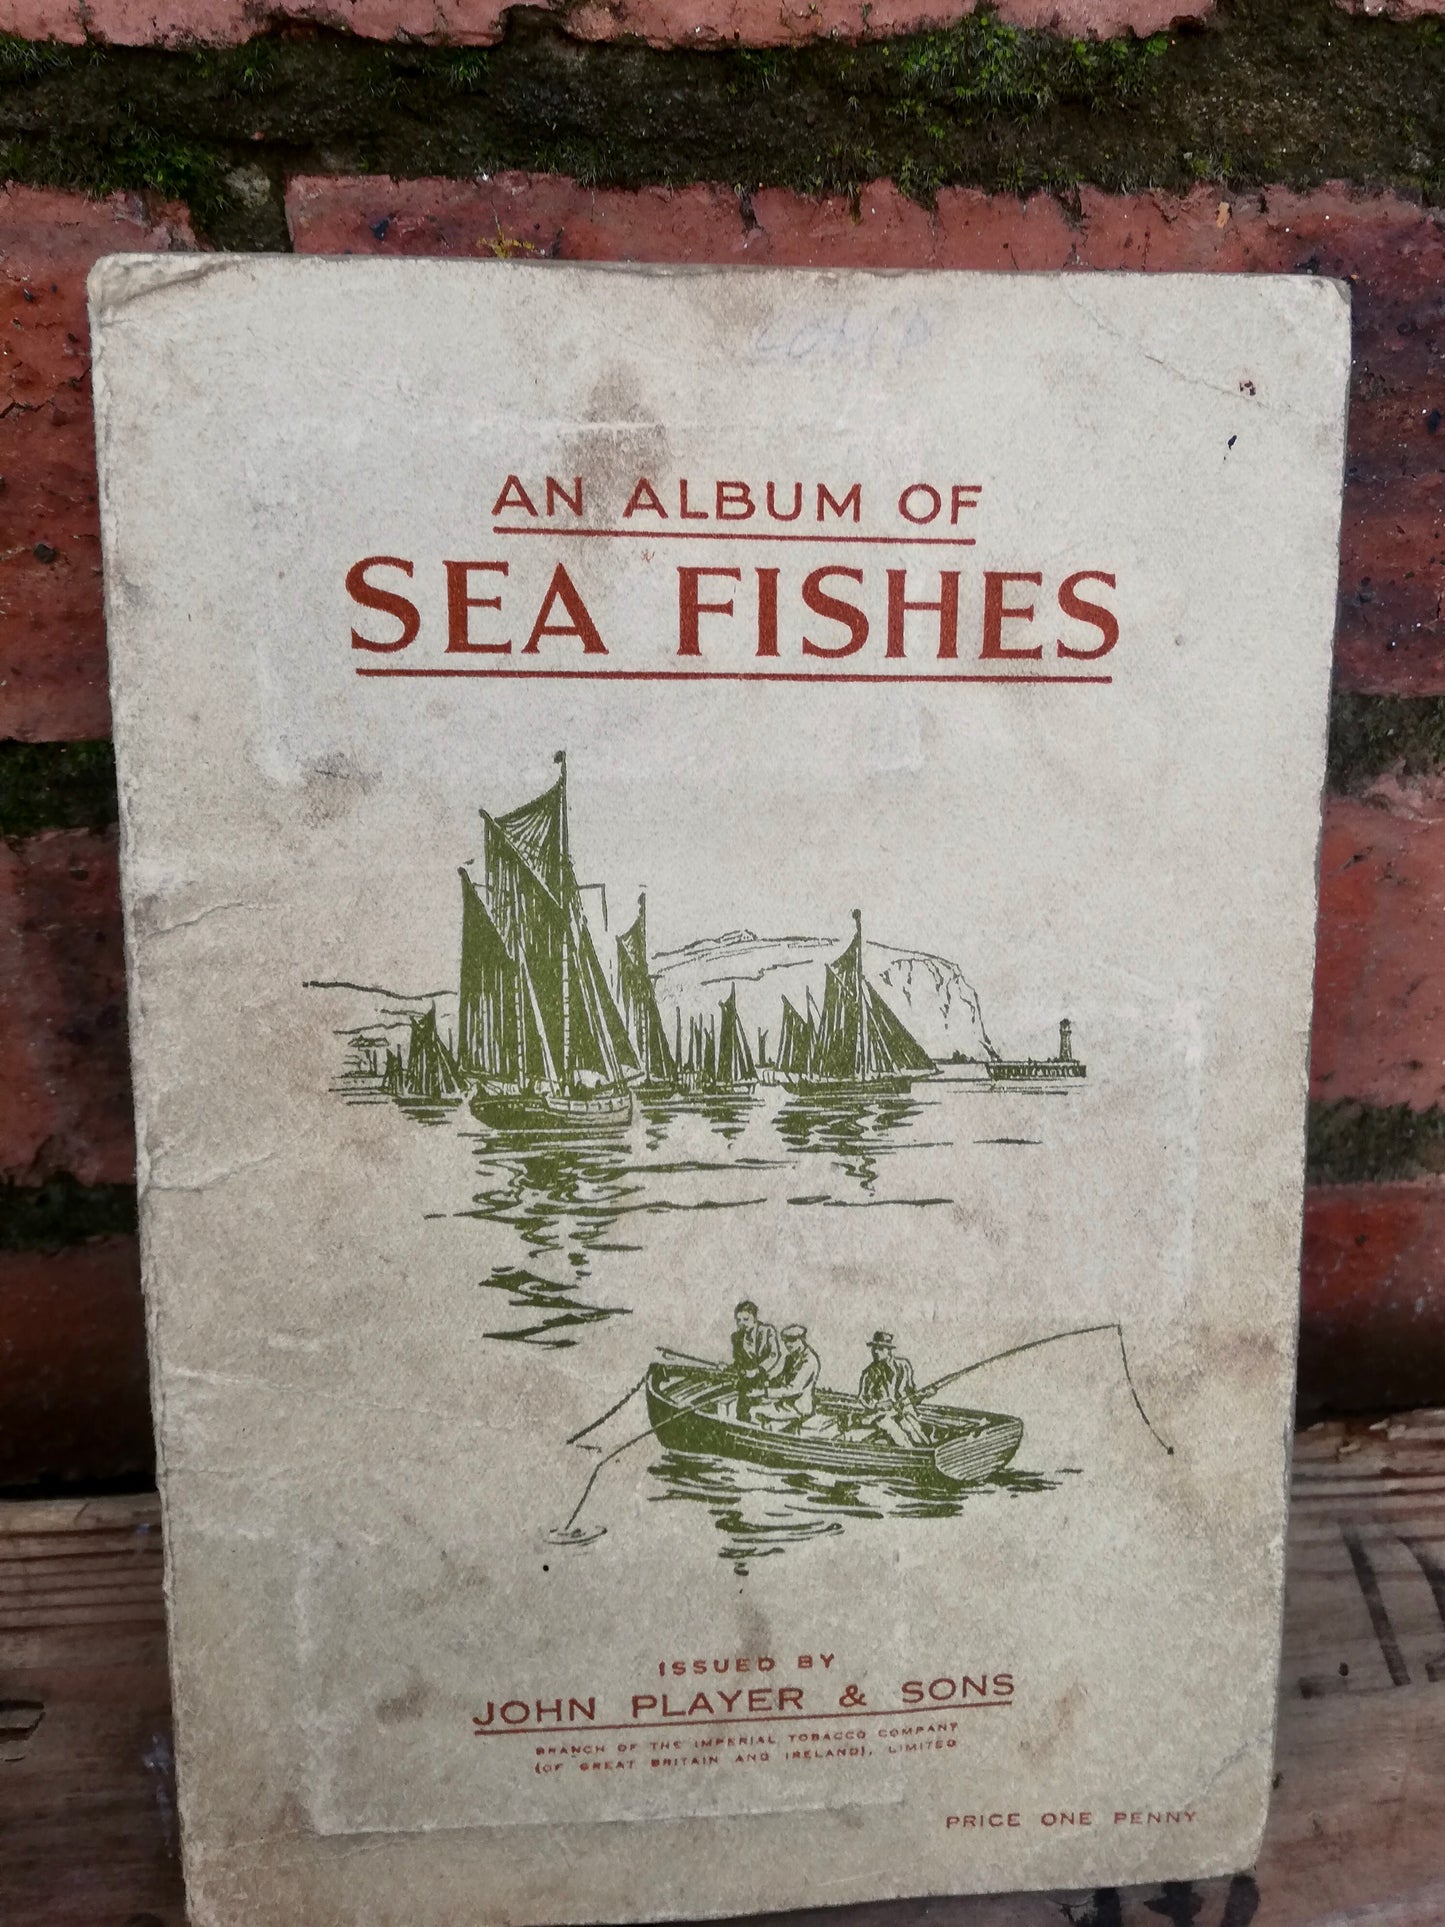 Gorgeous vintage cigarette card book - Sea Fishes